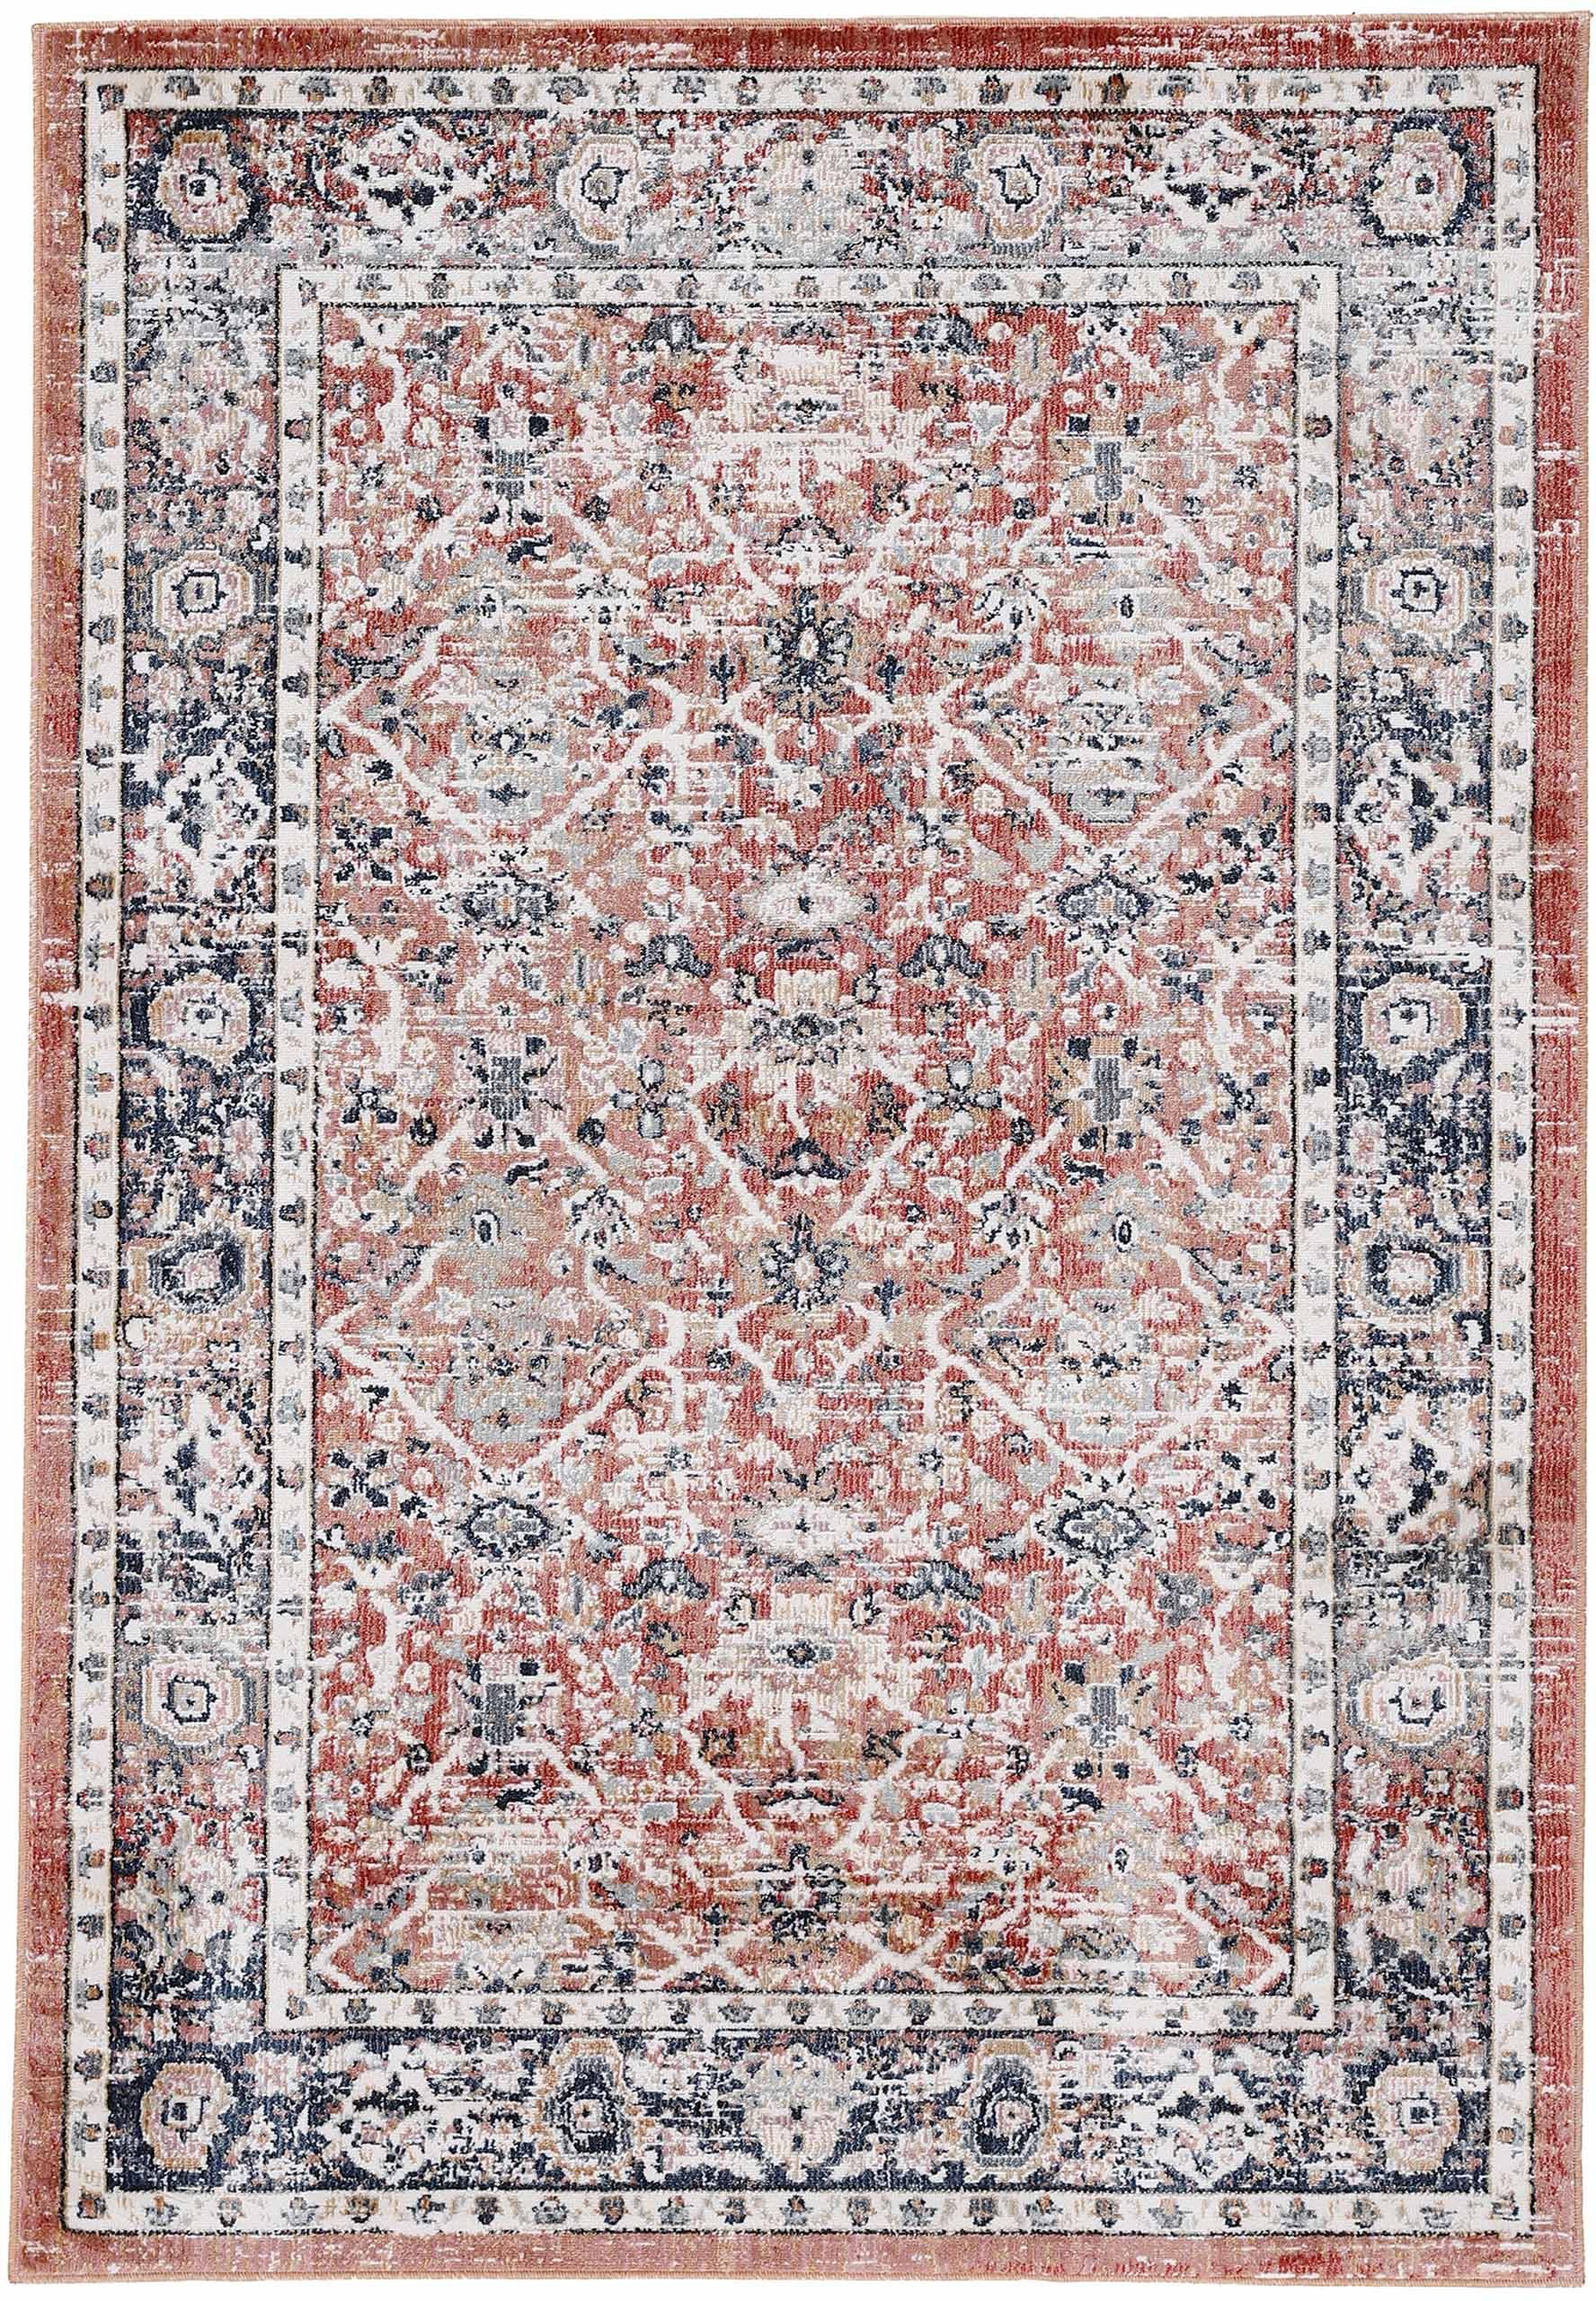 Teppich Vintage Liana_3, carpetfine, rechteckig, Höhe: 6 mm, Orient Vintage Look